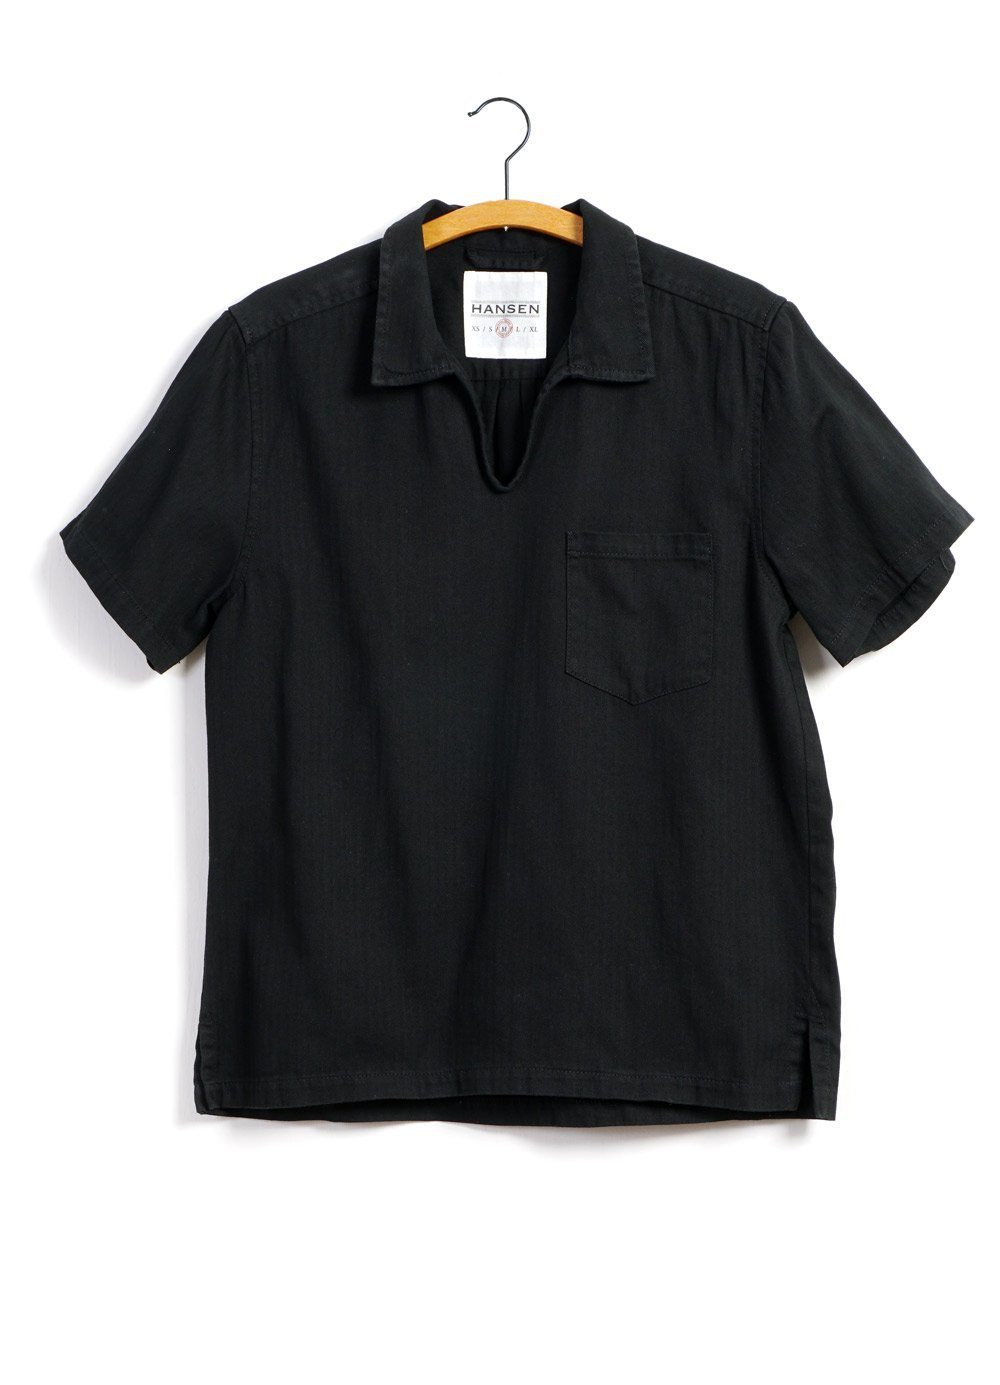 PHILLIP | Short Sleeve Pull-On Shirt | Black -HANSEN Garments- HANSEN Garments